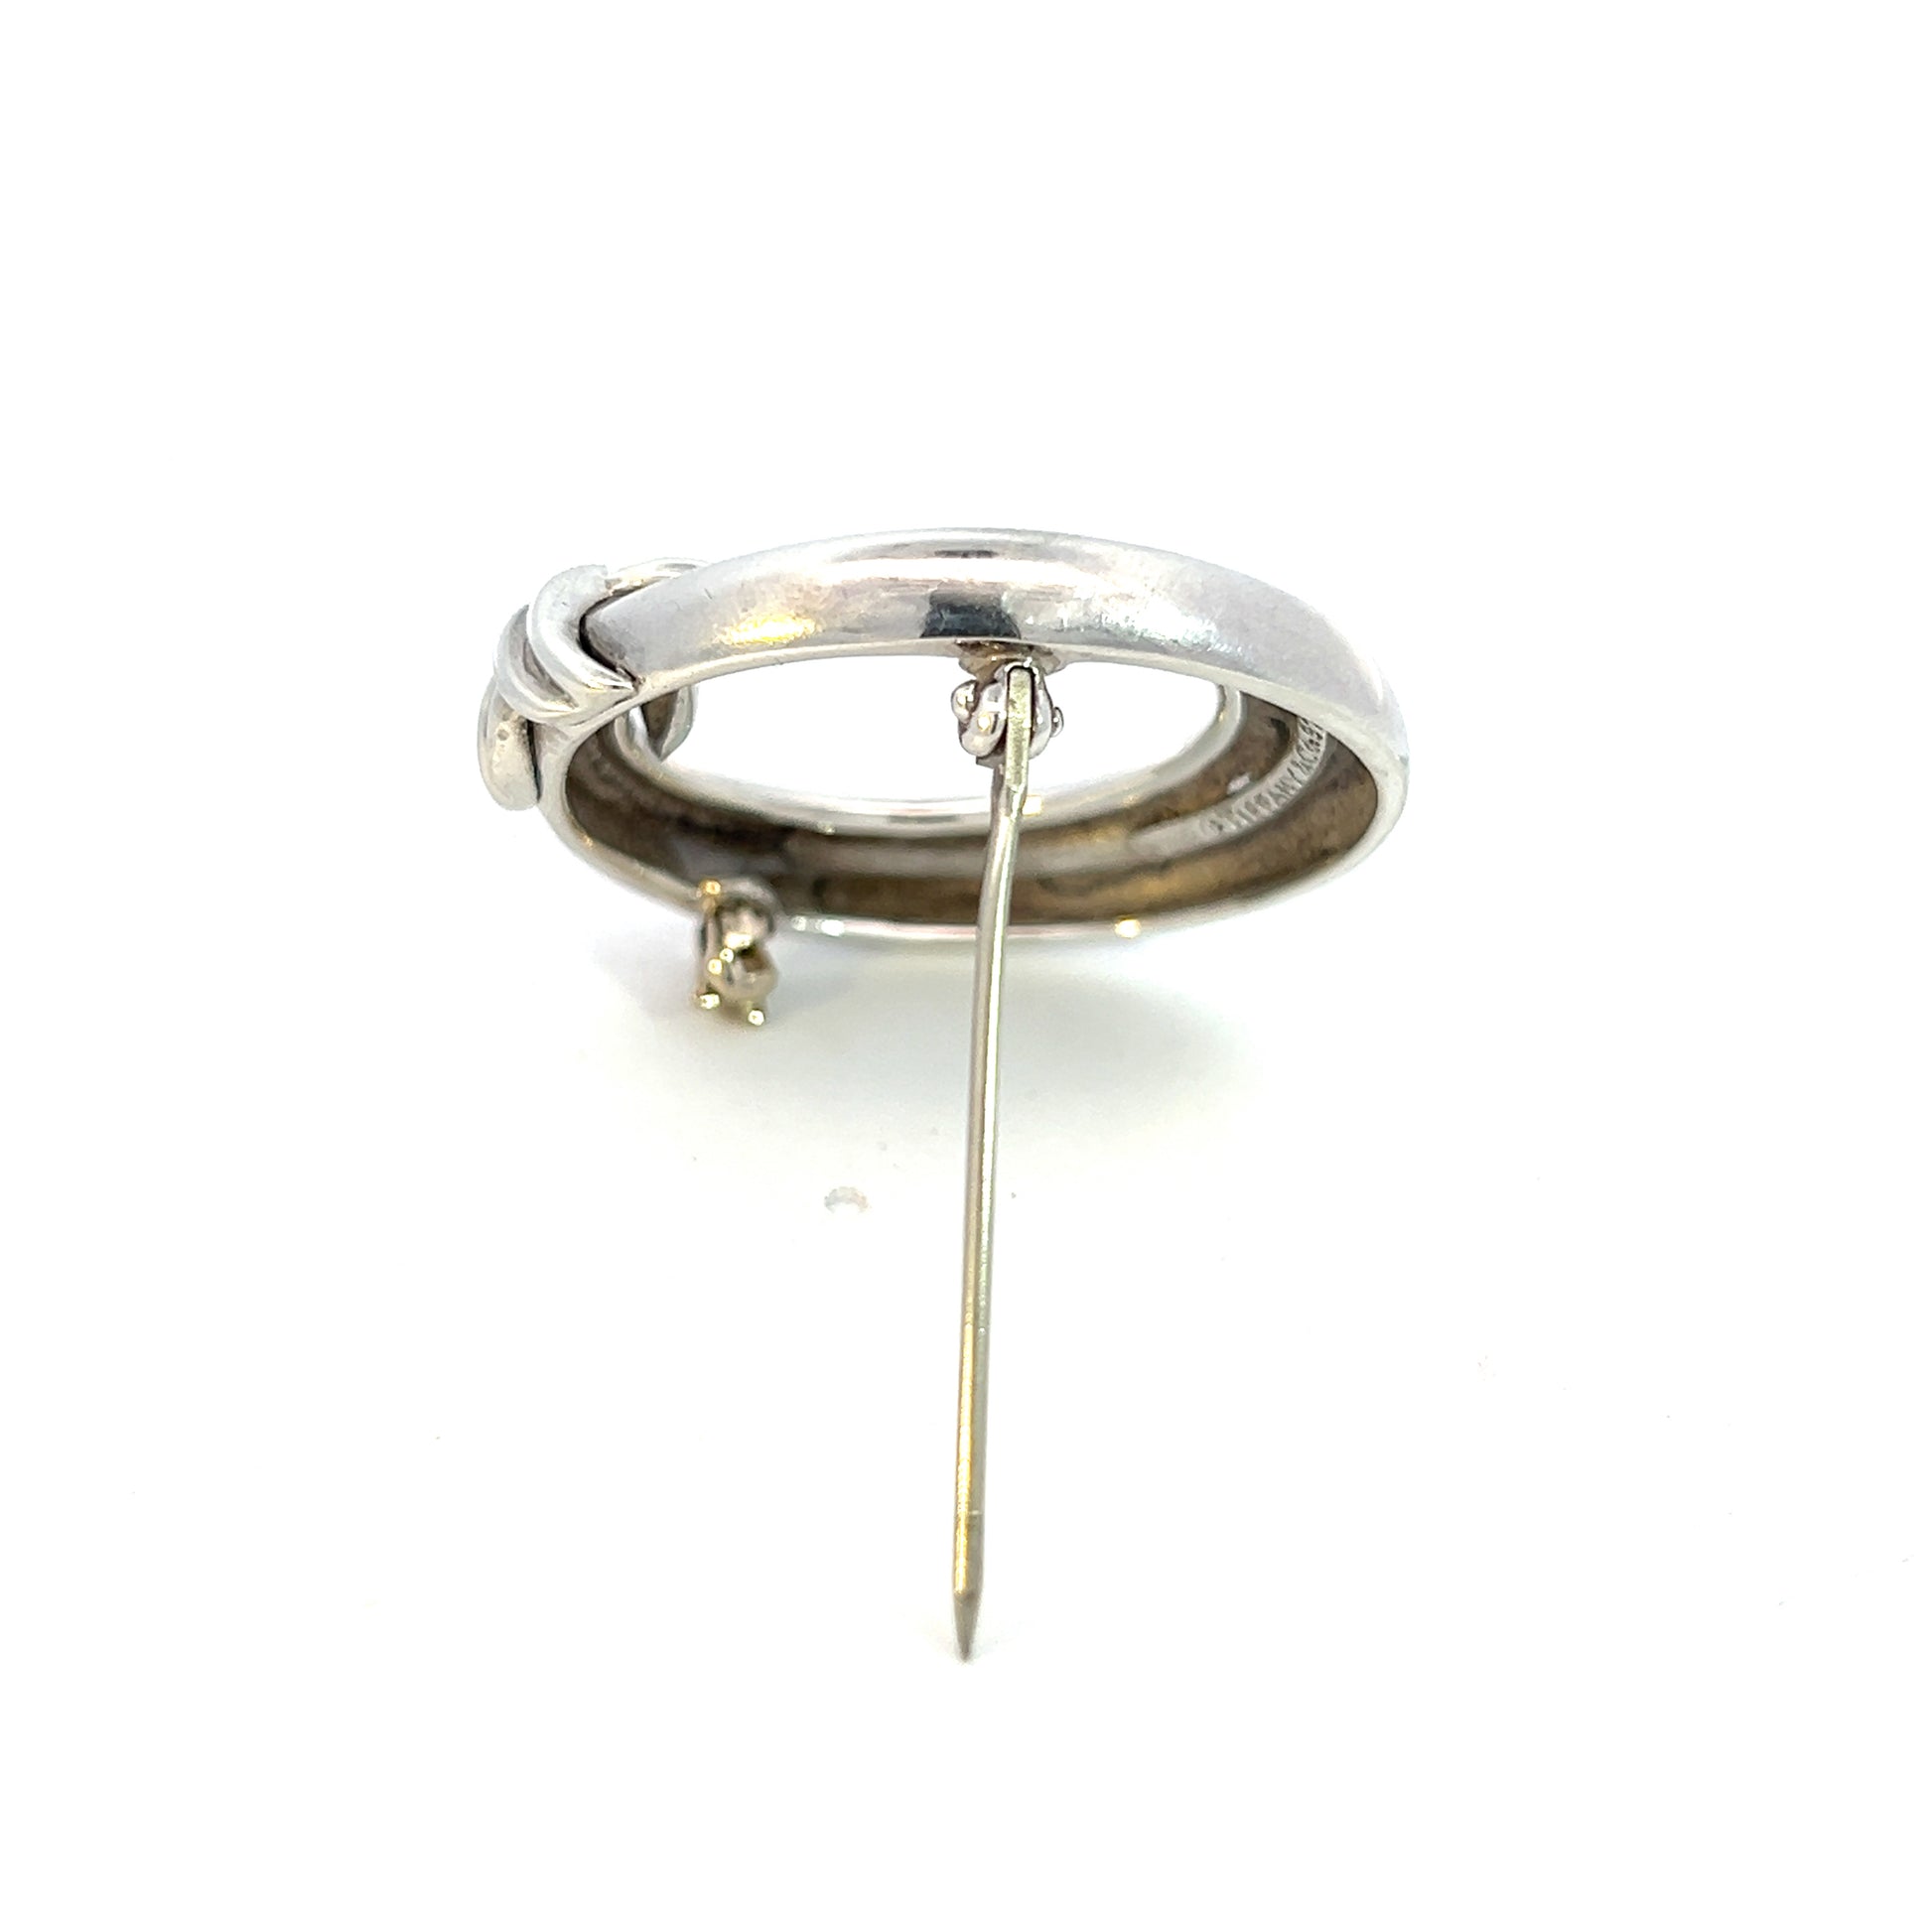 Tiffany & Co Estate Signature "X" Brooch Pin Sterling Silver TIF559 - Certified Fine Jewelry